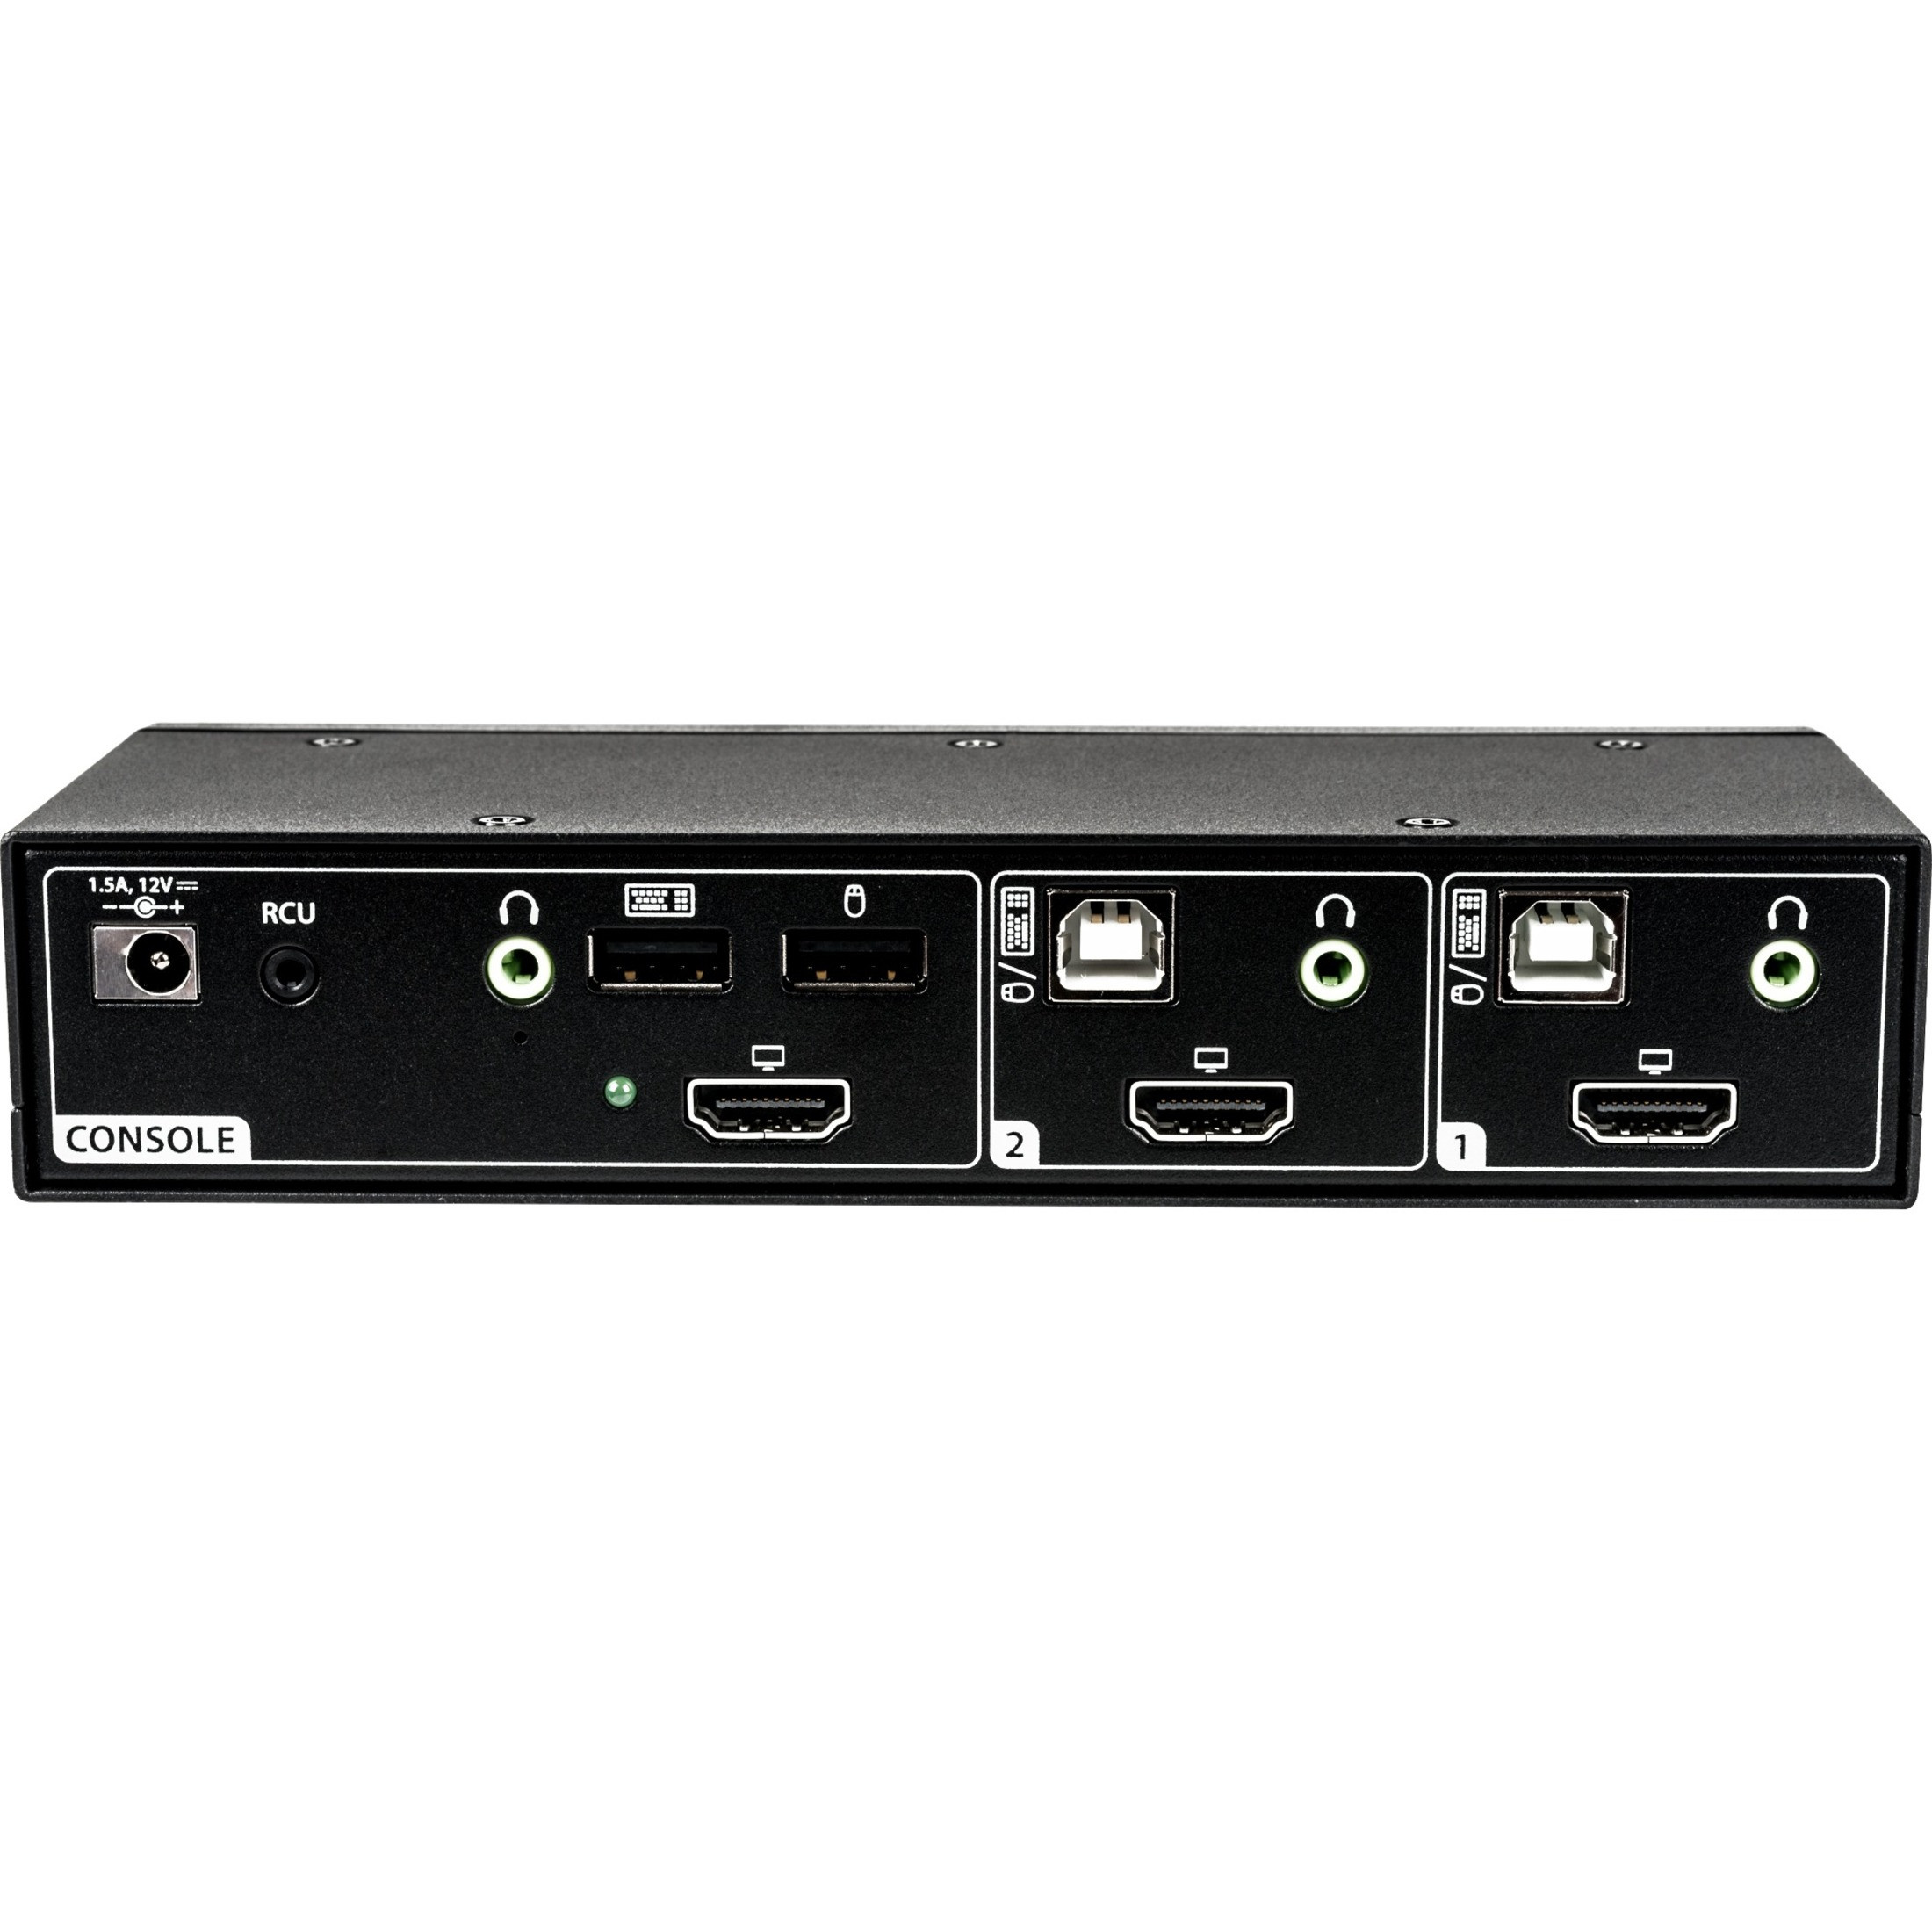 Vertiv AVOCENT Cybex SC840 Secure 4-Port KVM Switch, Single-Head DVI-I (dual-link)4 Computer1 Local User2560 x 16002 x PS/2 PortUSB… SC840-202